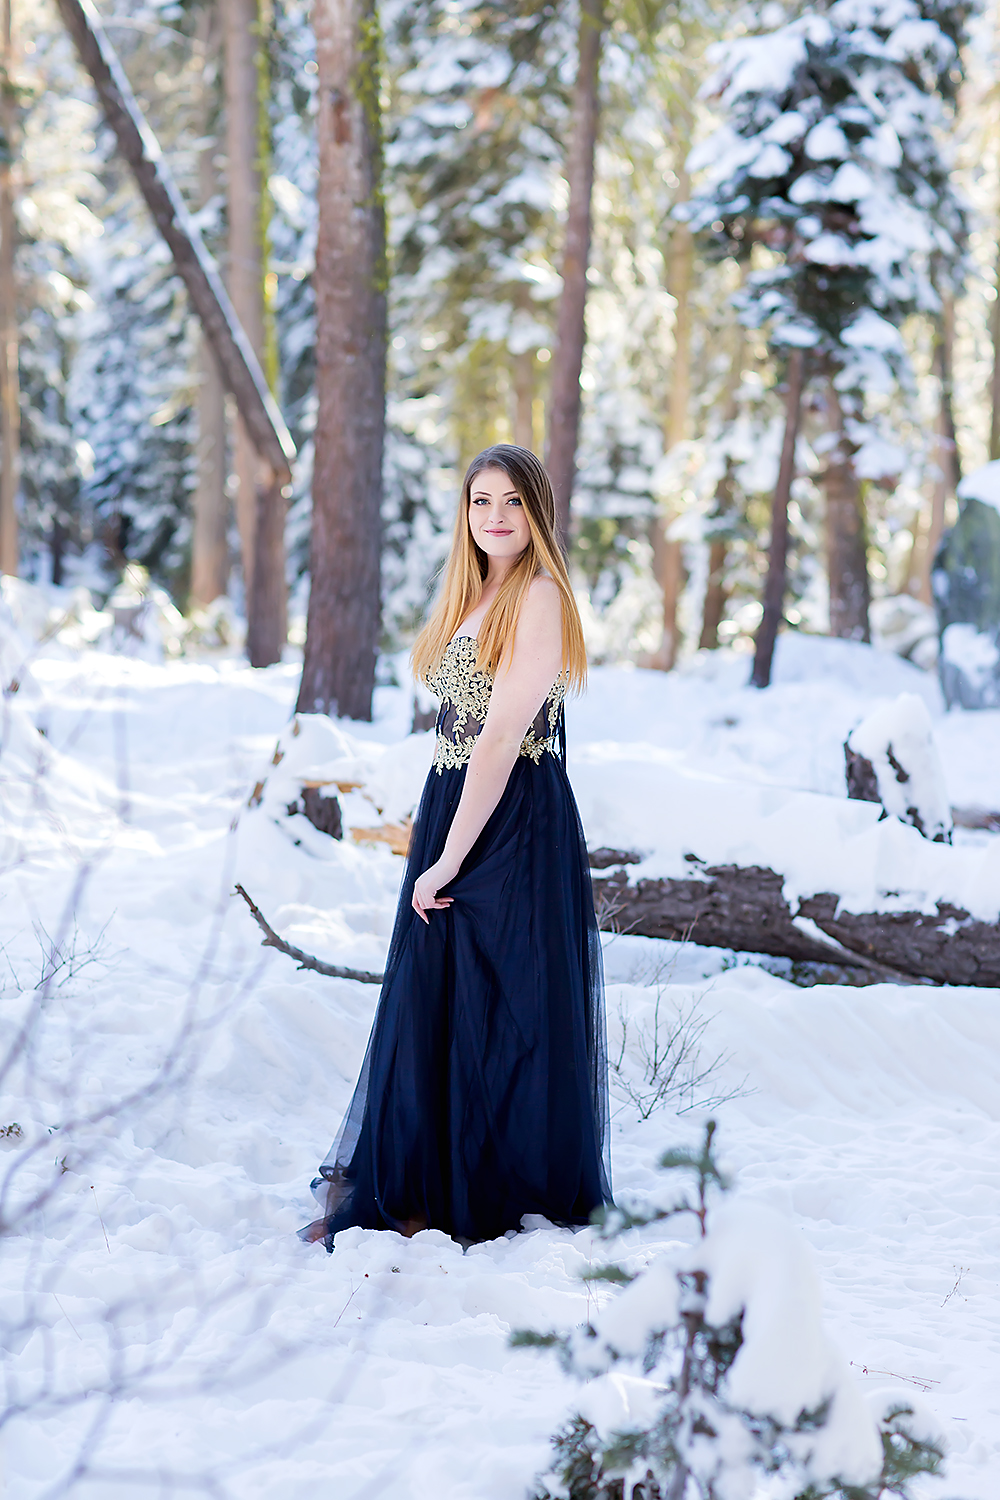 Senior Model team destination session in snow in Tahoe, California by El Dorado Hills senior Photographer Colleen Sanders, formal, prom dress, winter.